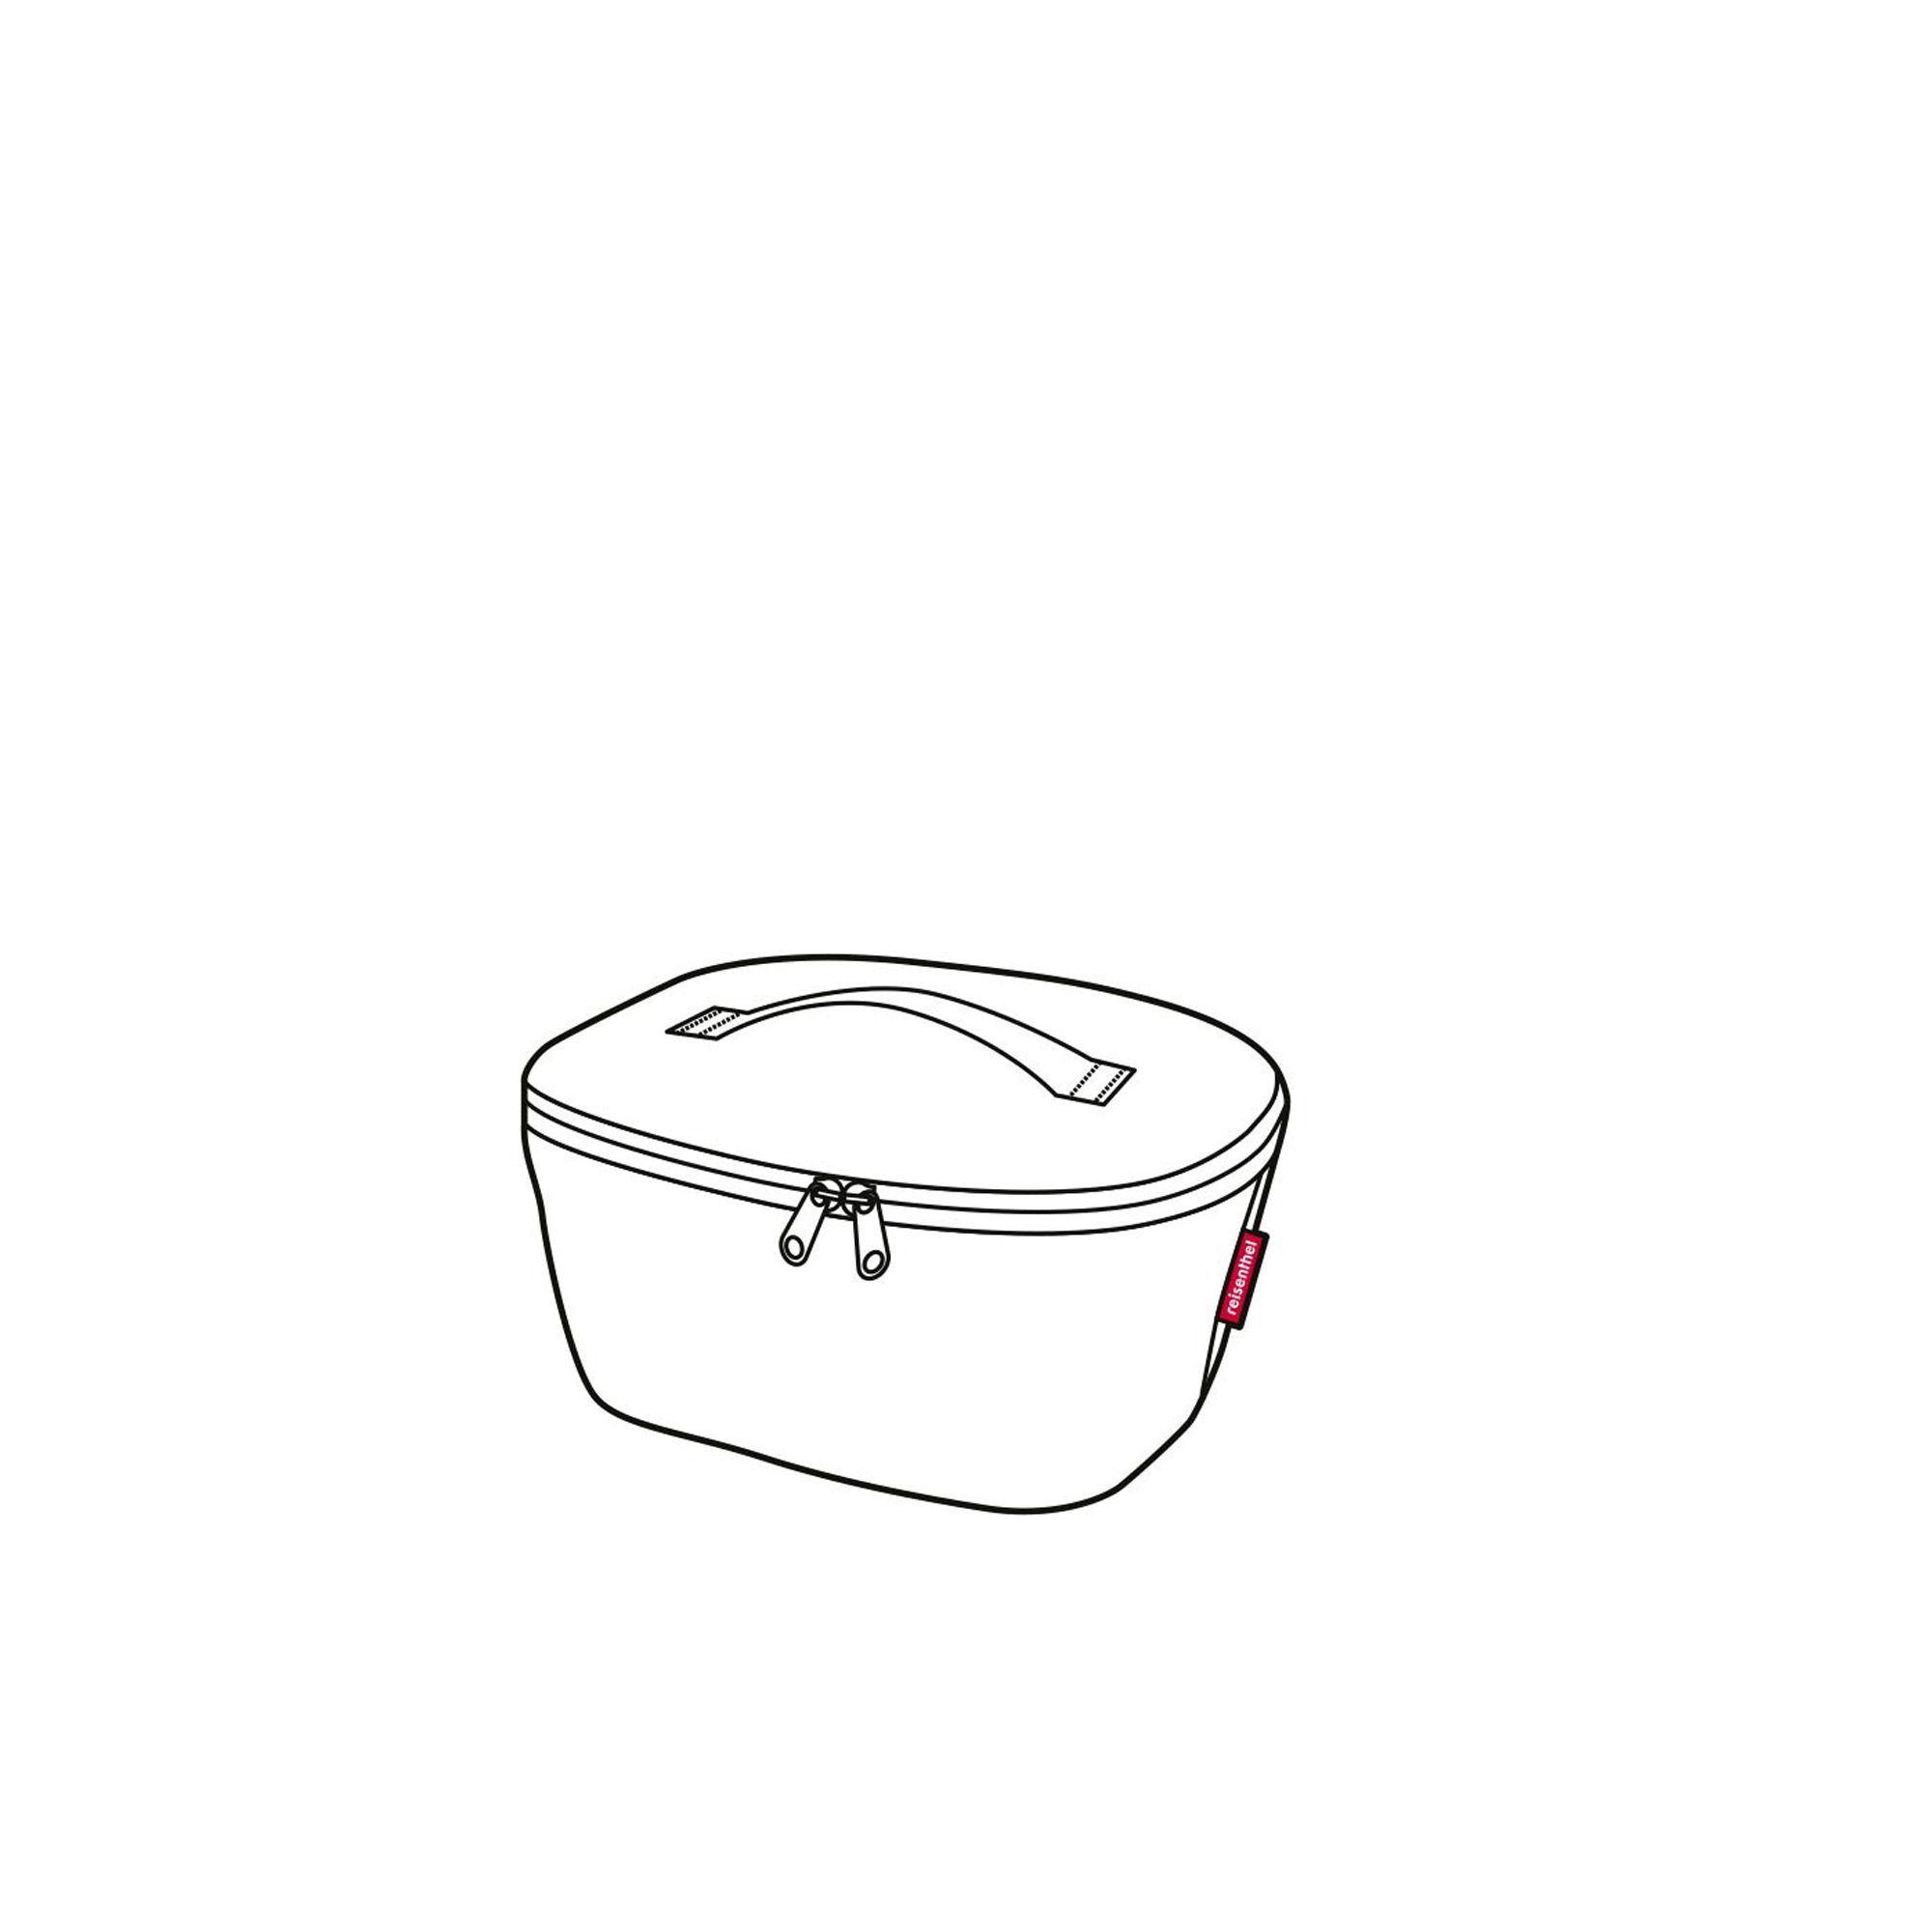 reisenthel - coolerbag S pocket -dots white